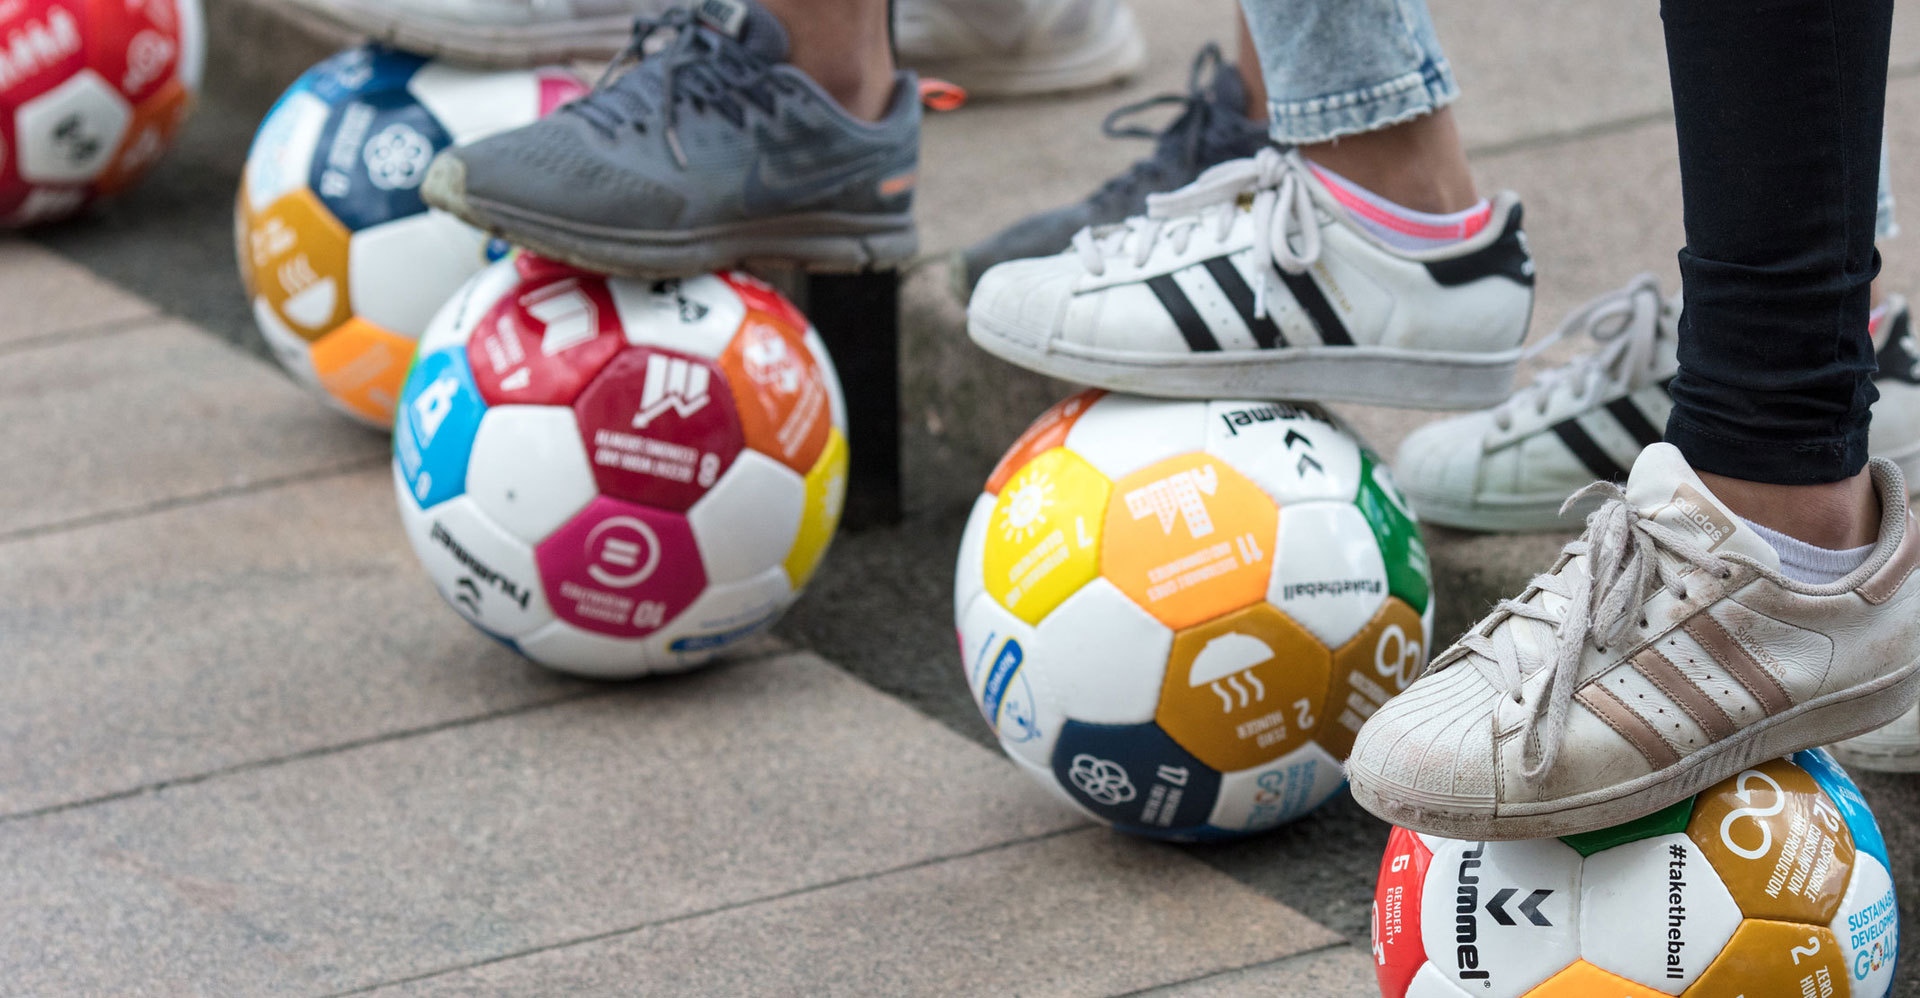 SDG logos on footballs with feet